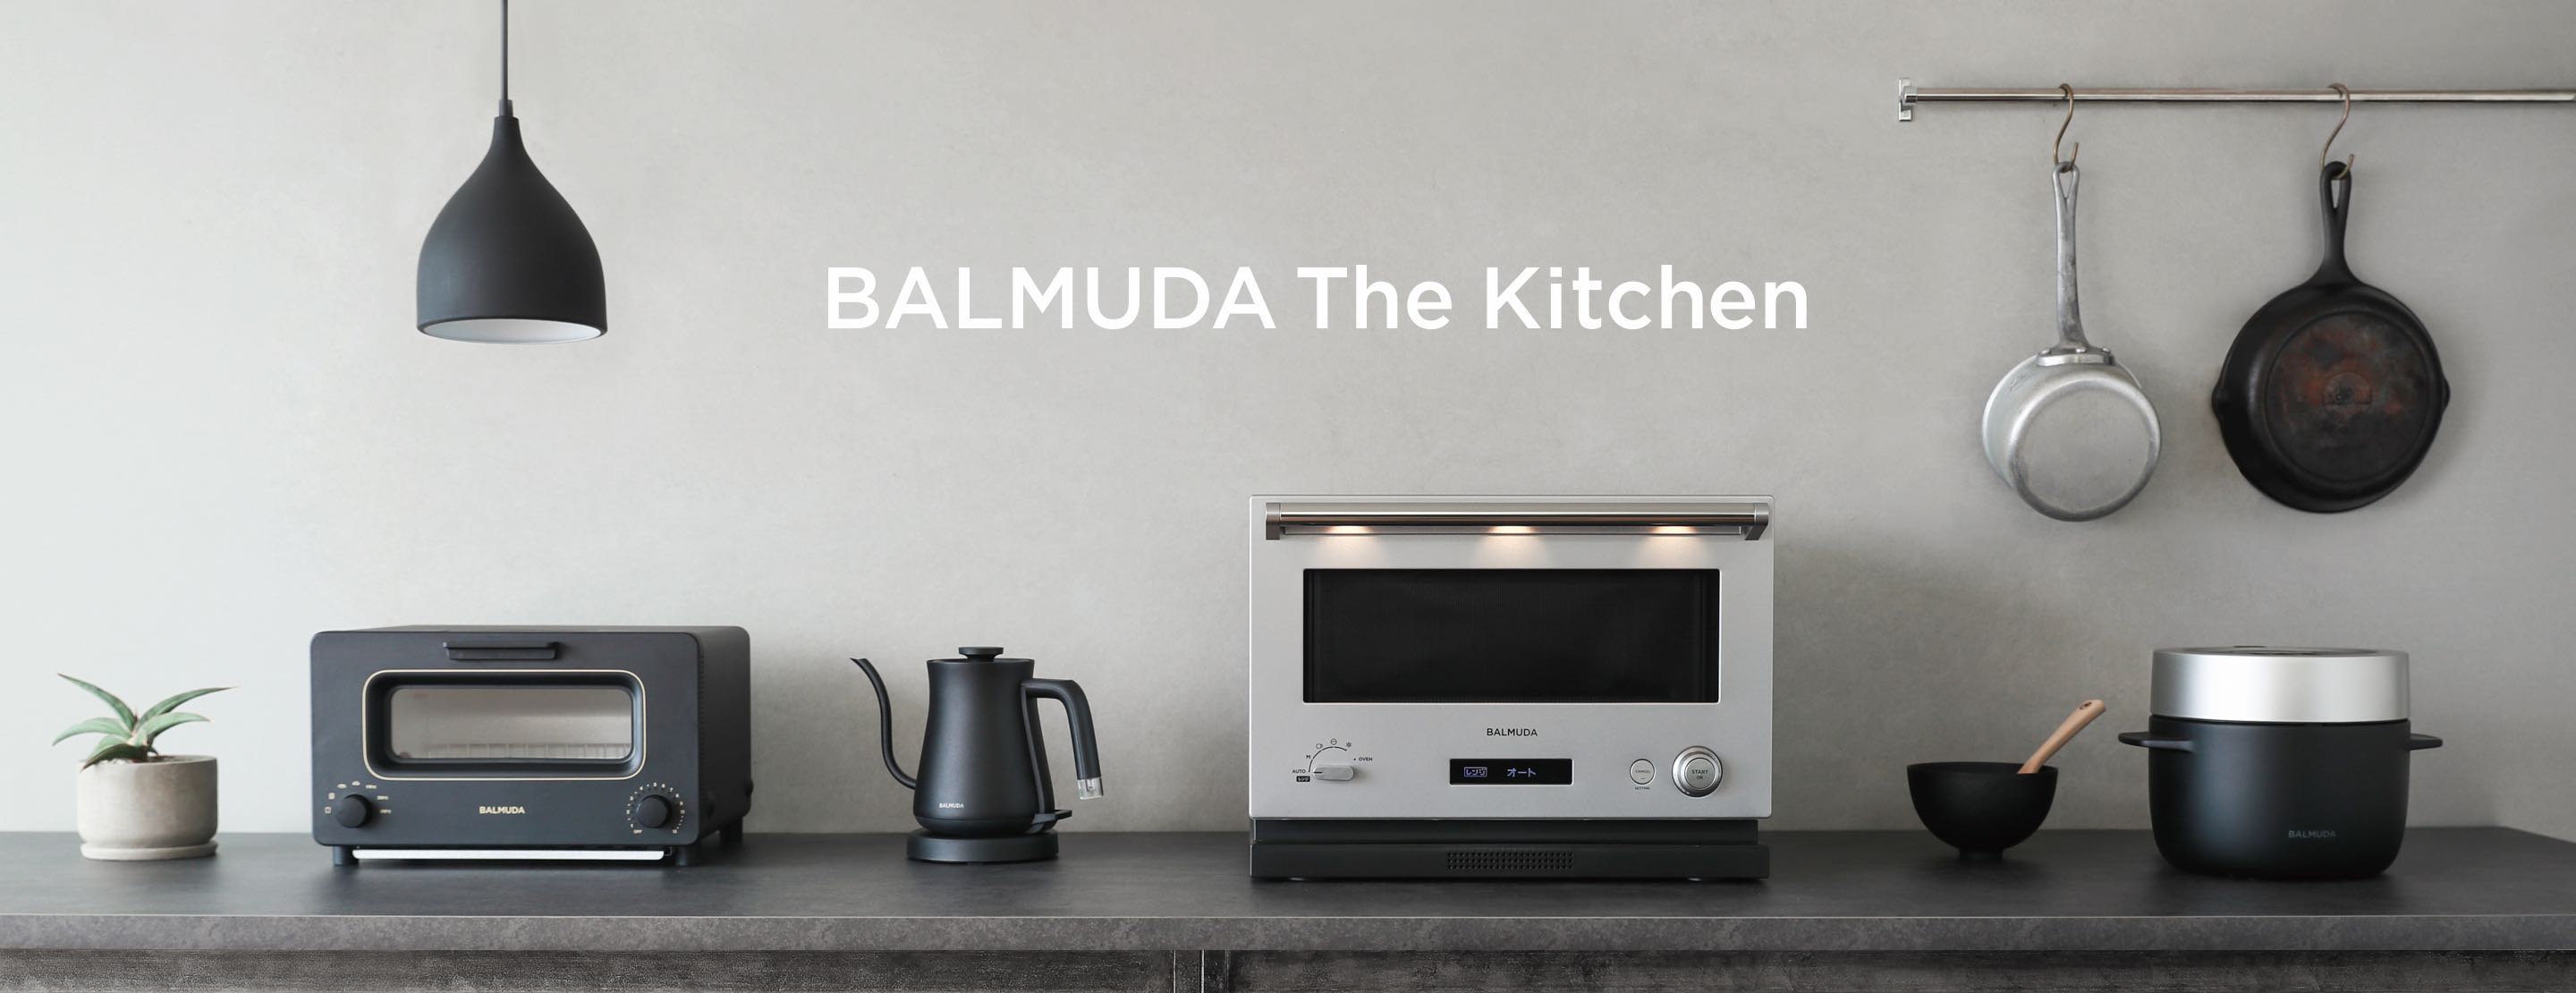 BALMUDA The Kitchen